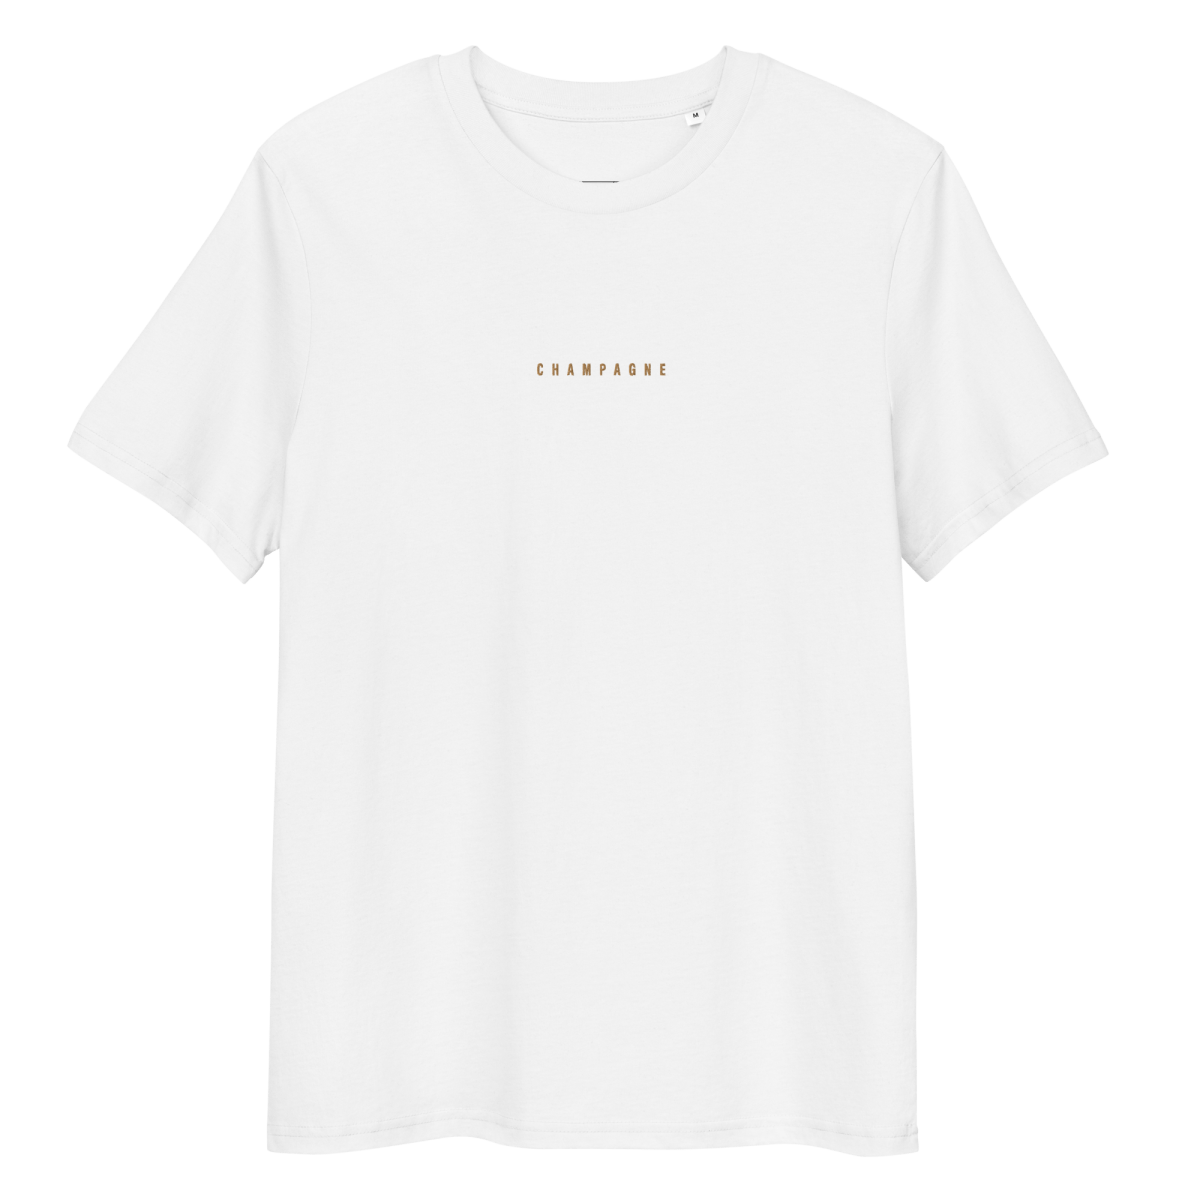 The Champagne organic t-shirt